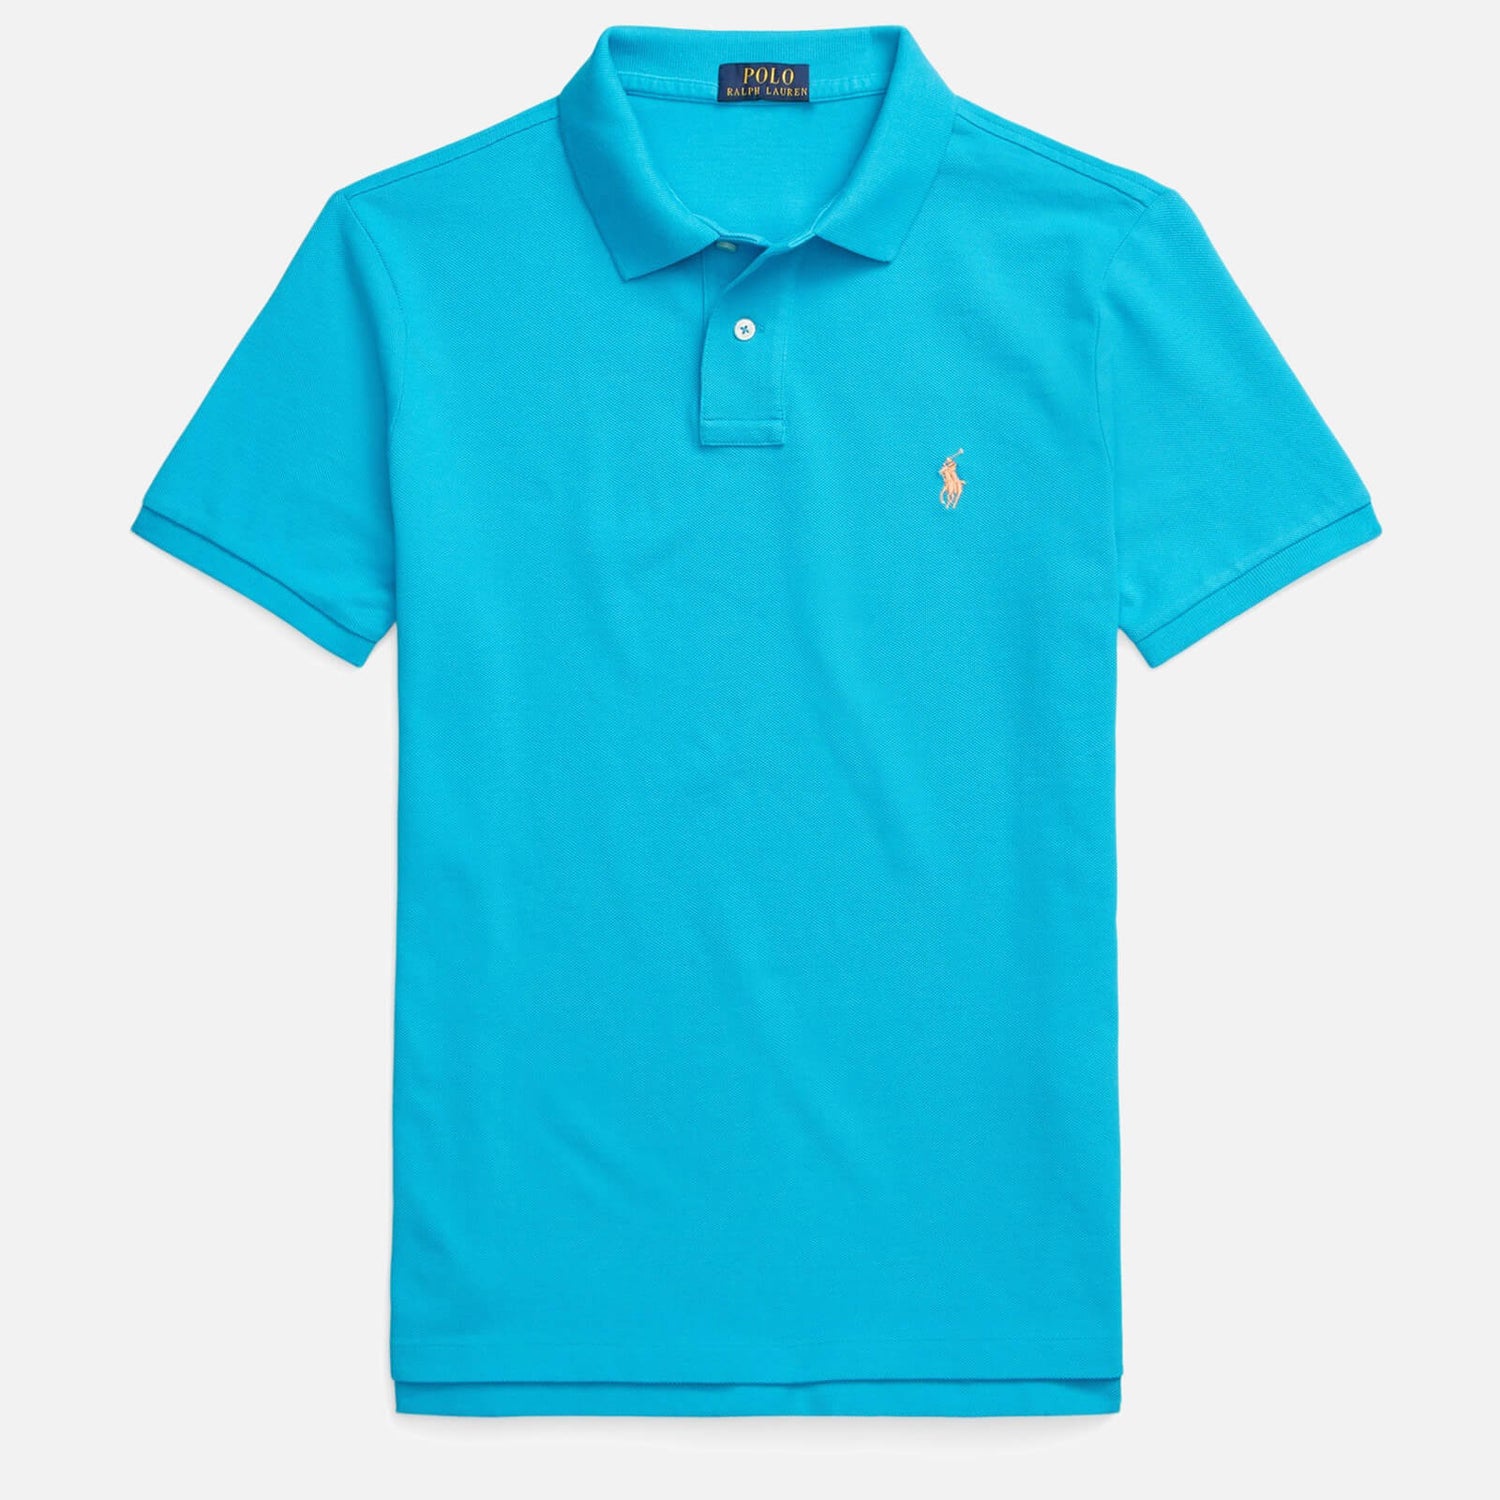 Polo Ralph Lauren Men's Slim Fit Mesh Polo Shirt - Cove Blue - S